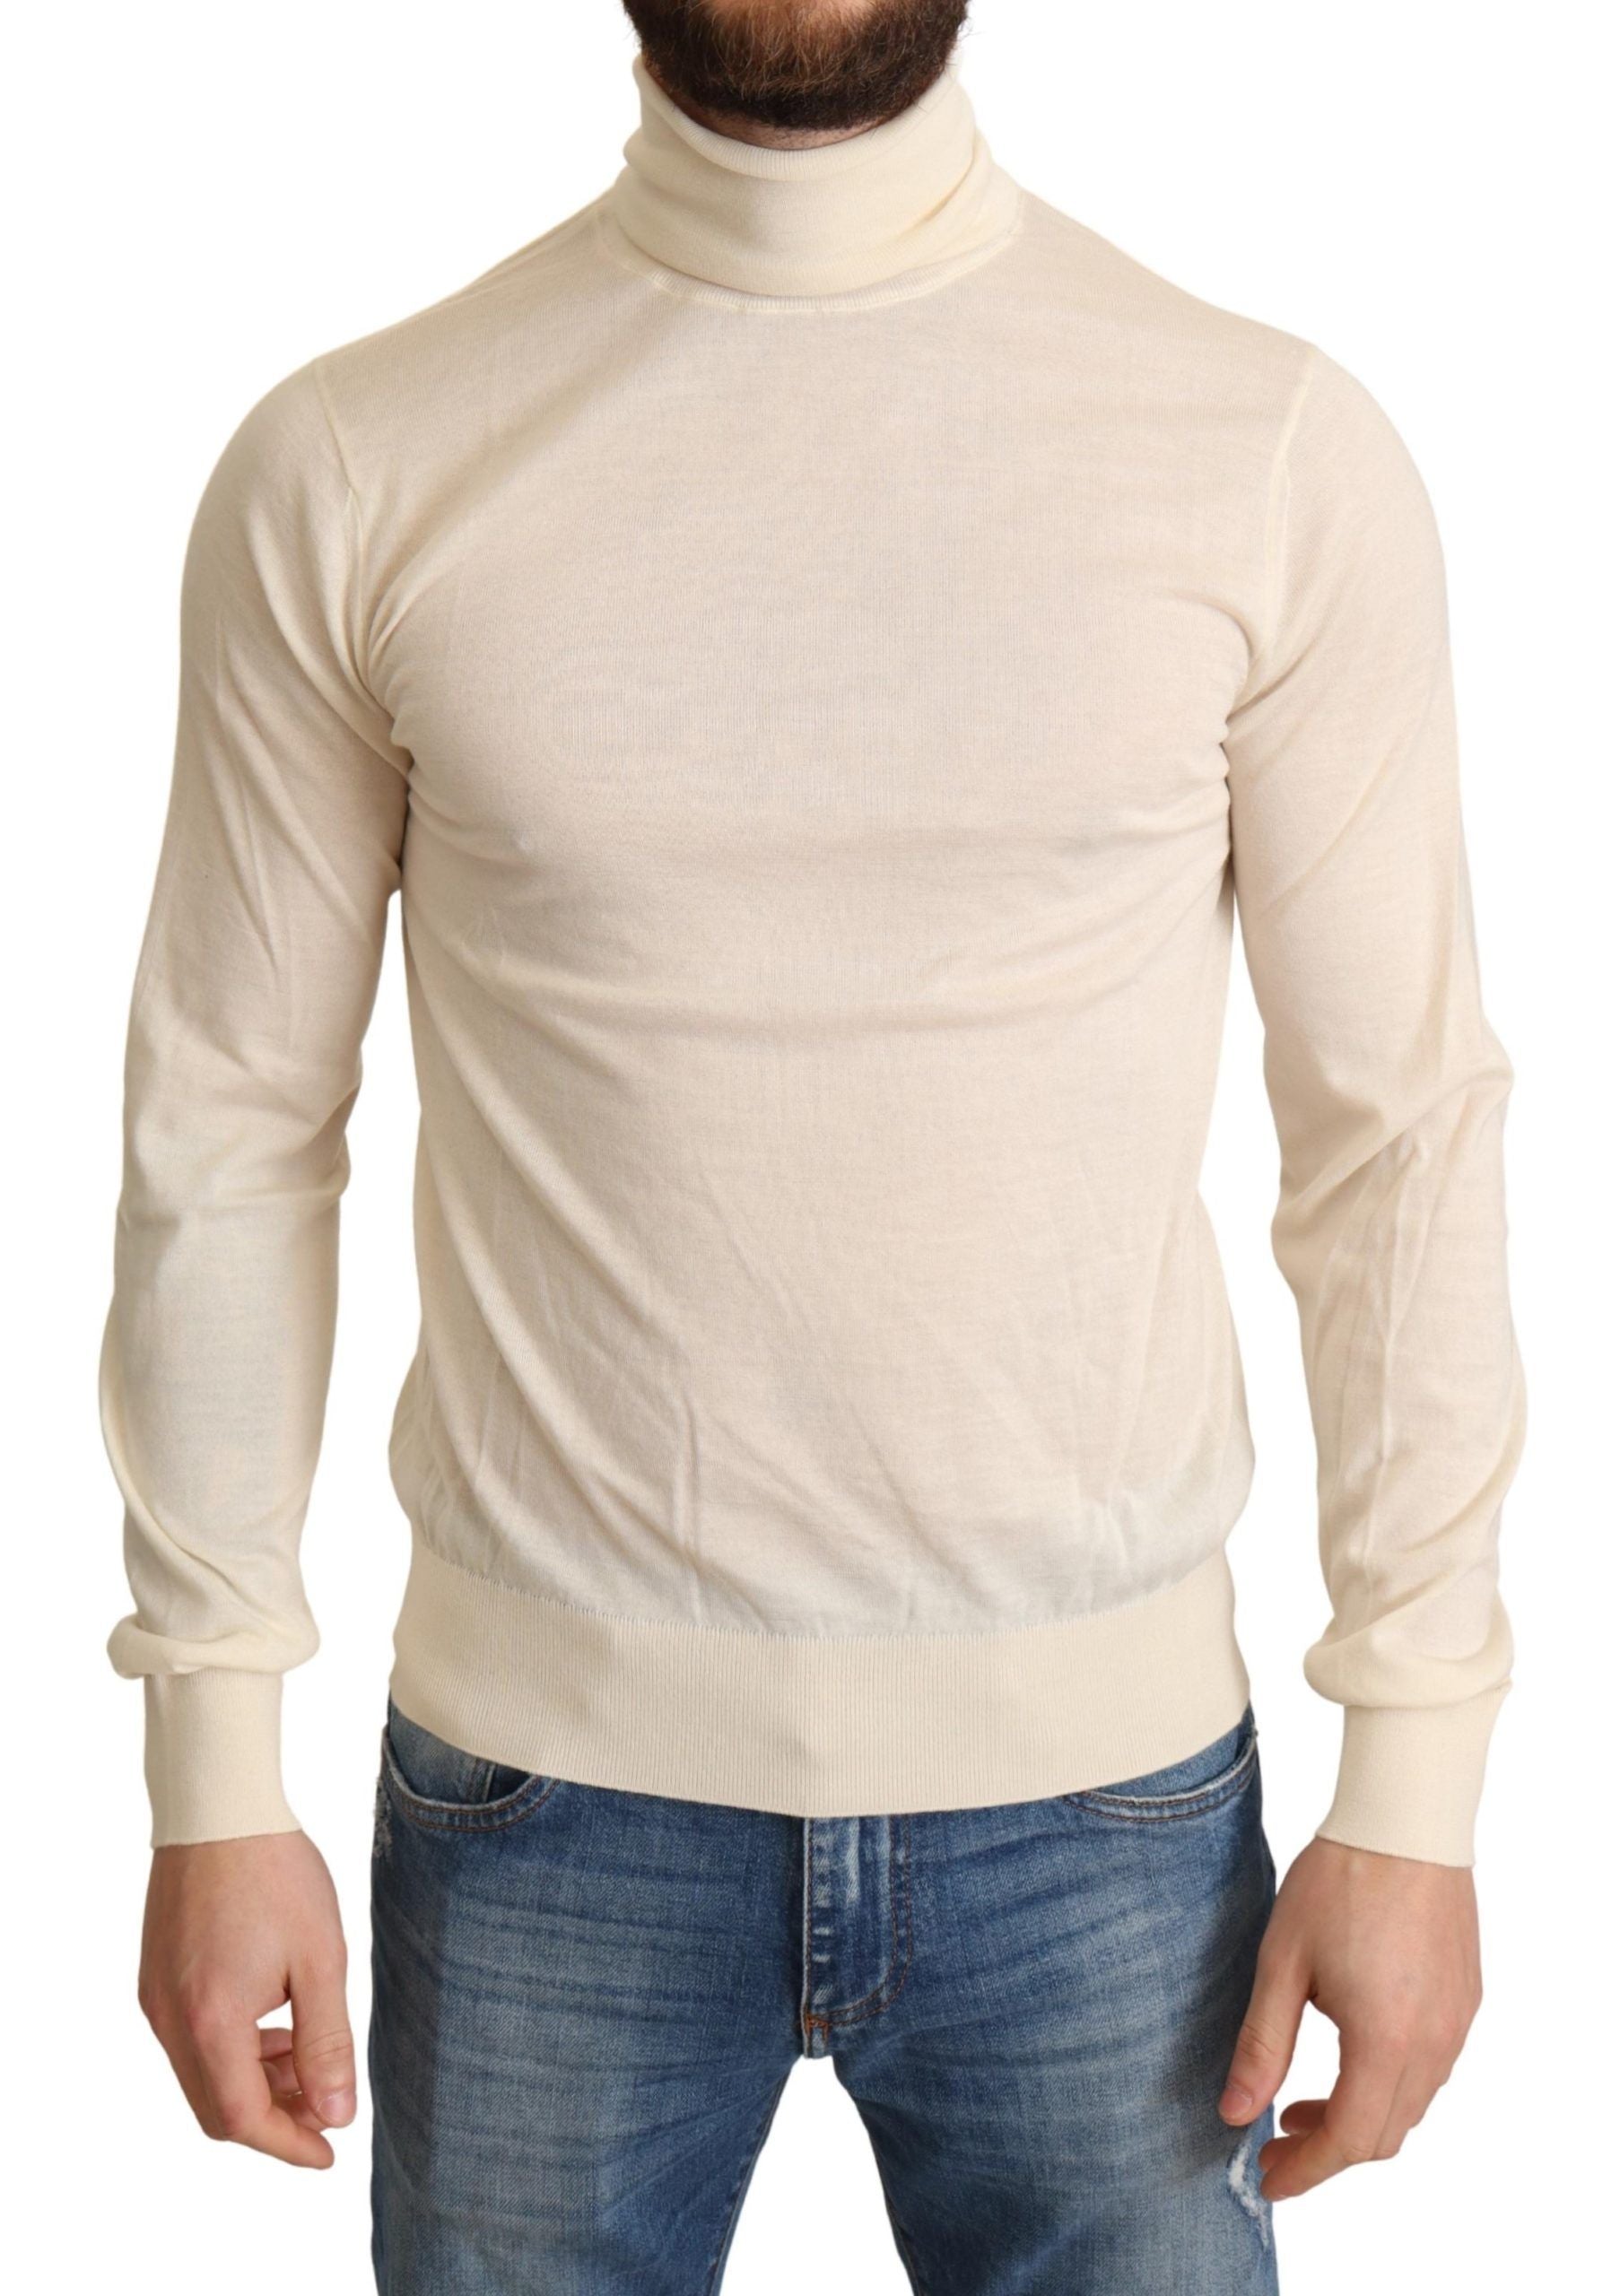 Cream Cashmere Turtleneck Sweater